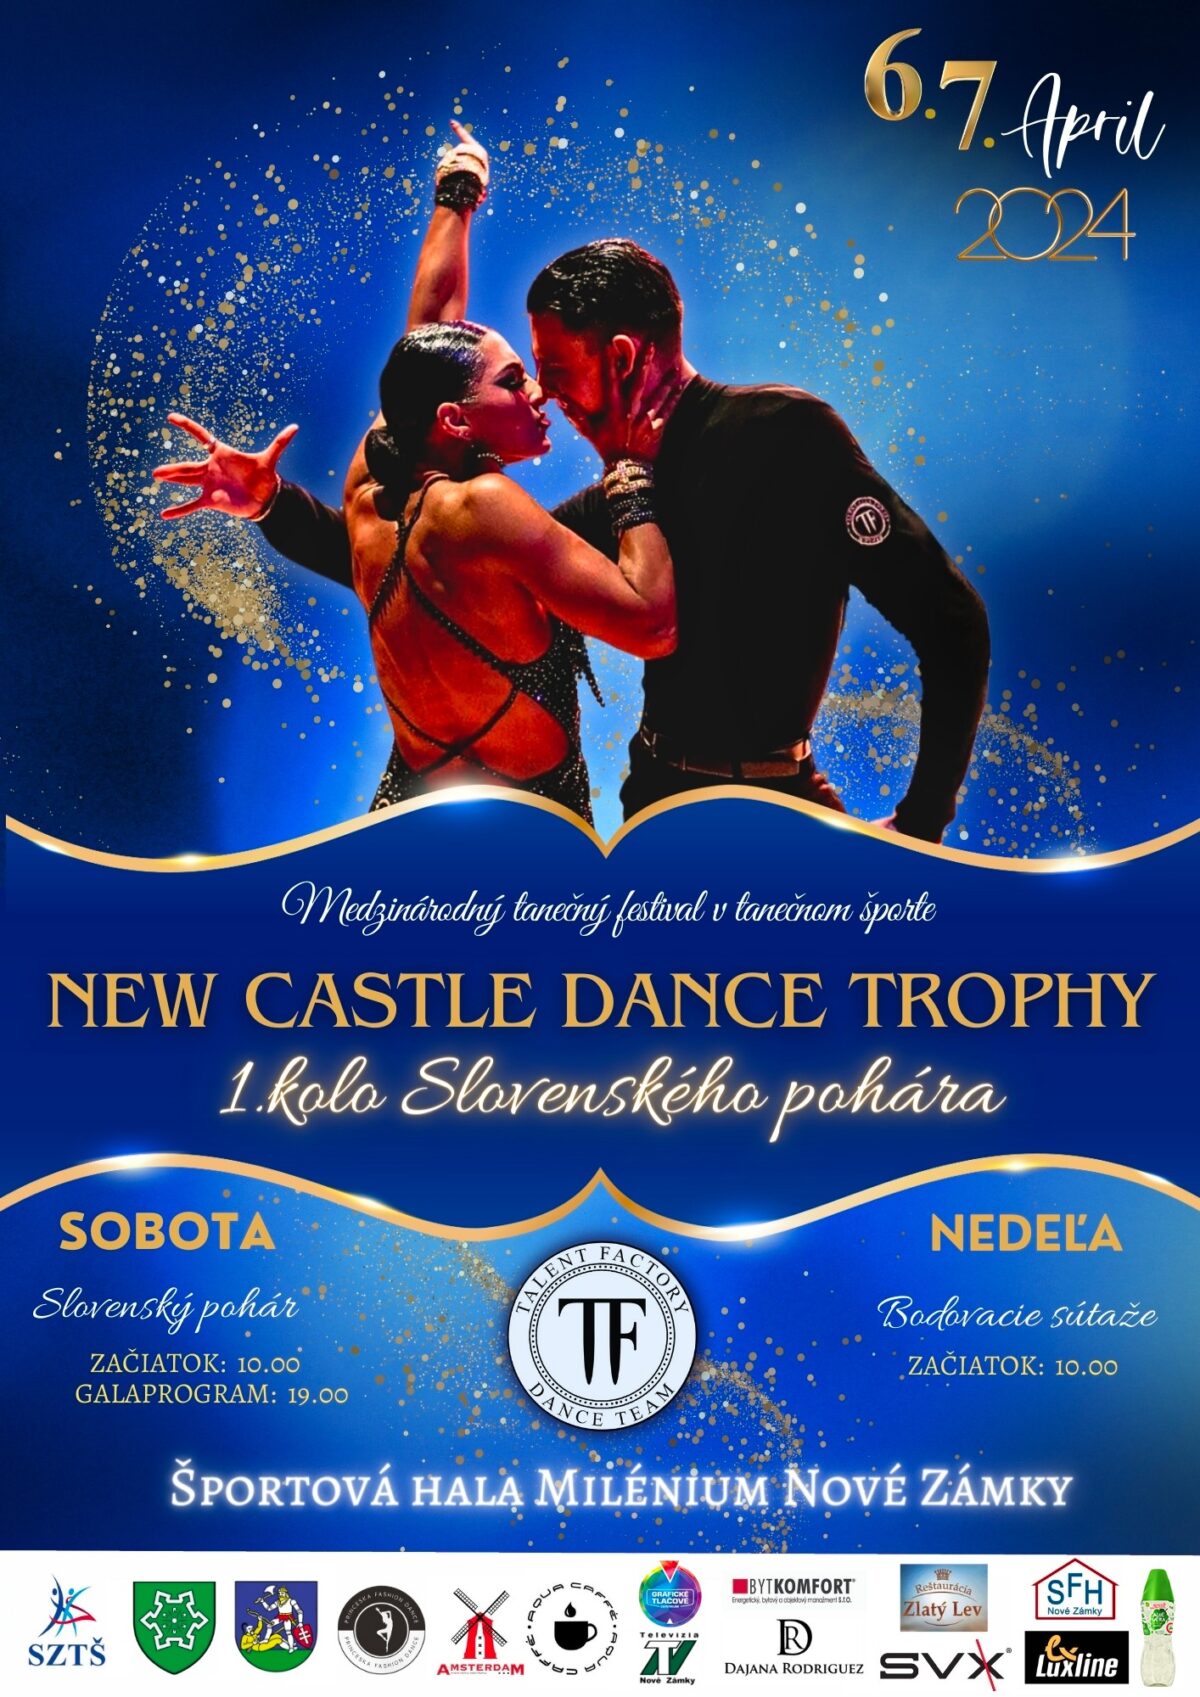 New Castle Dance Trophy